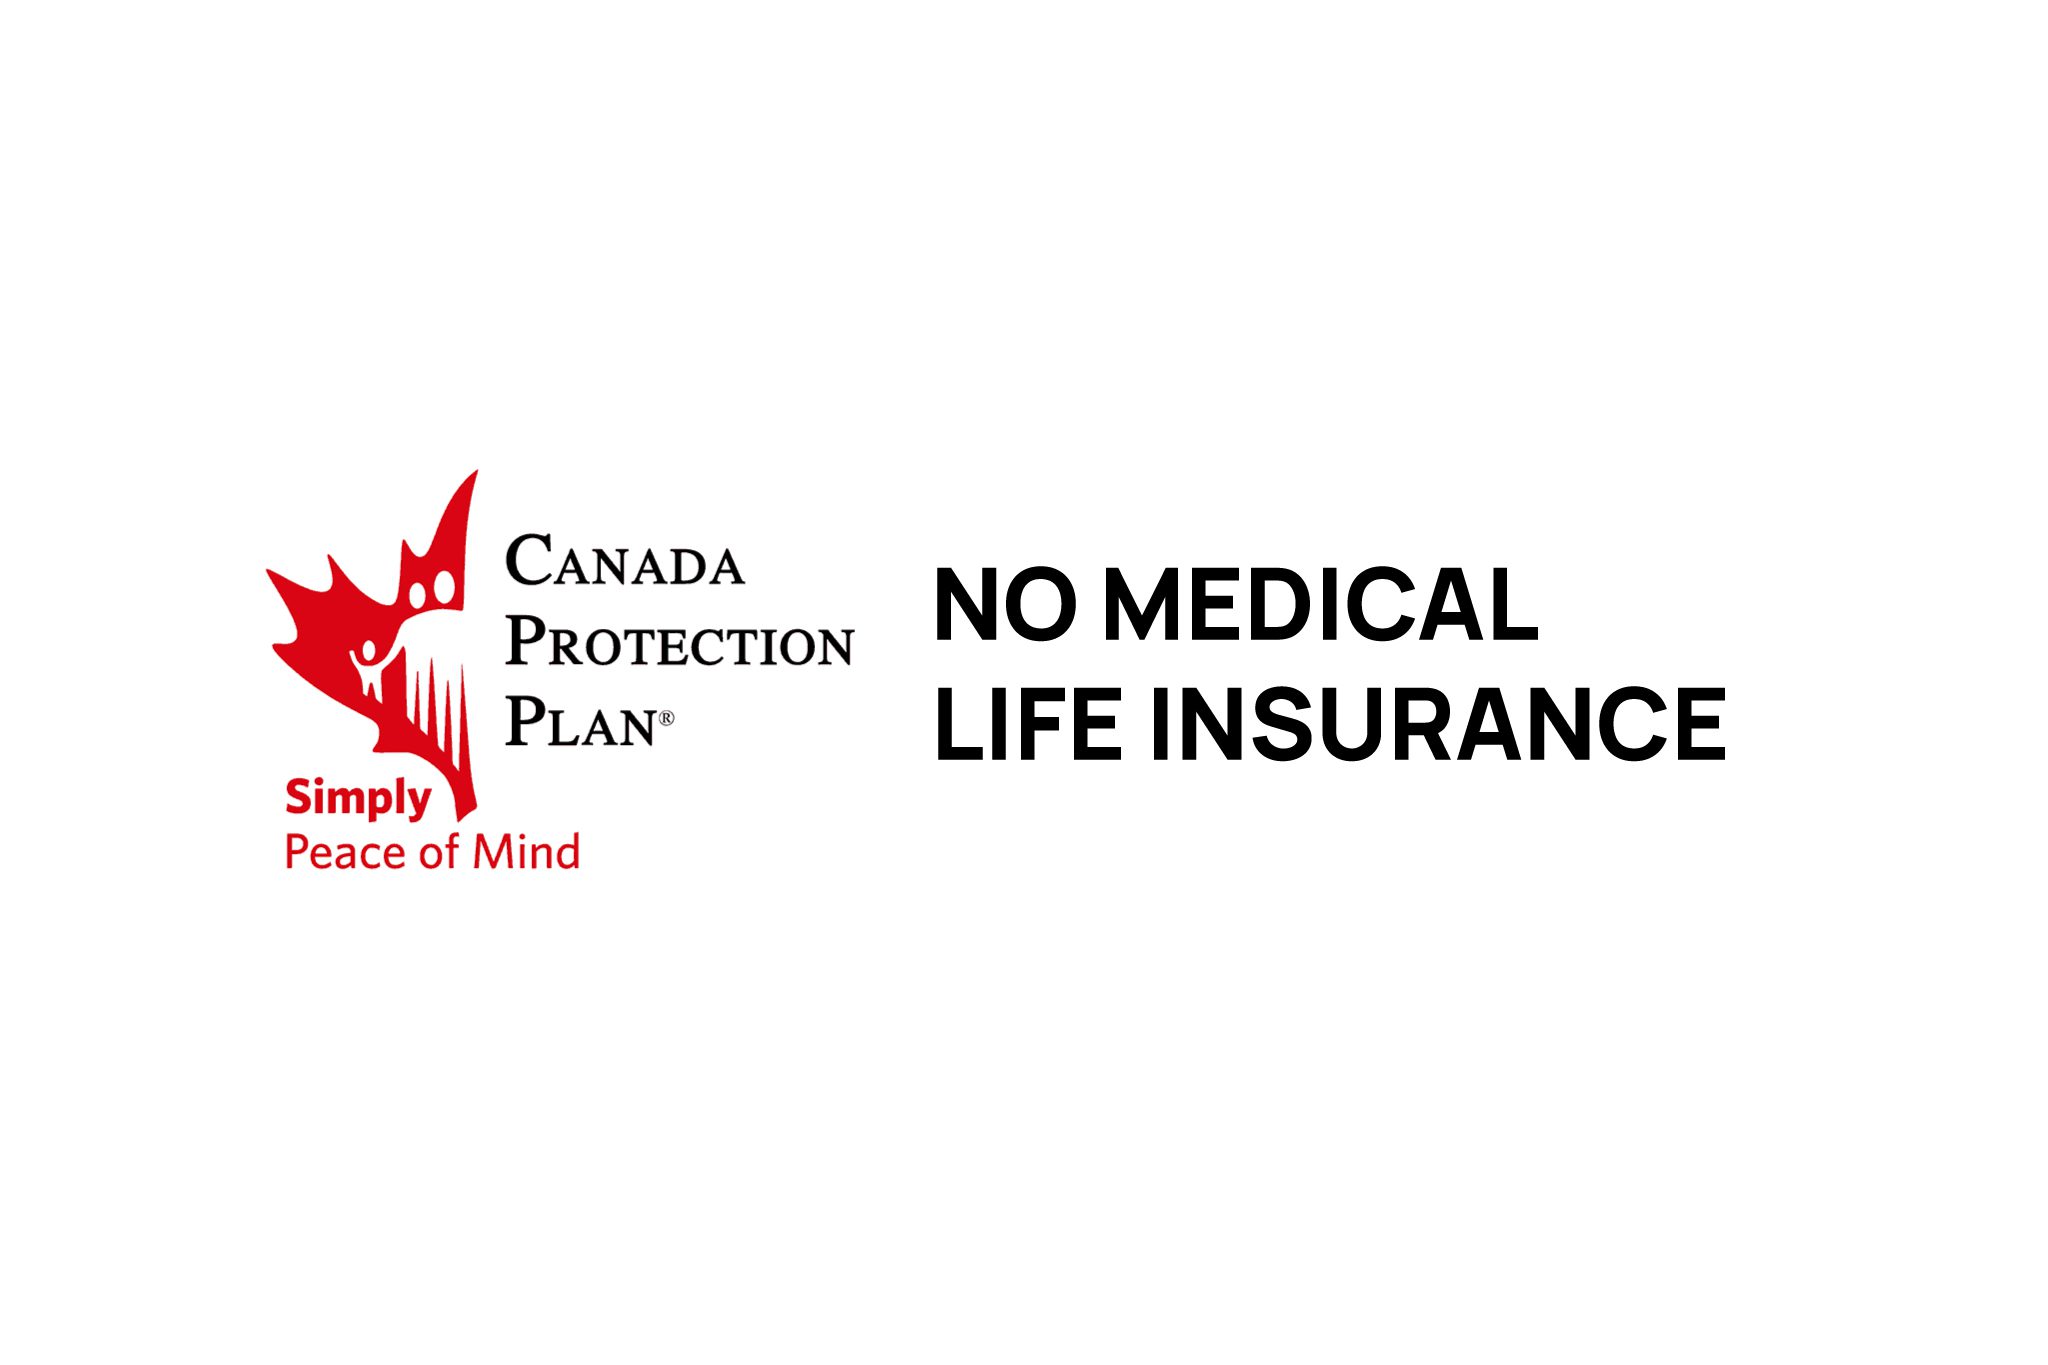 canada protection plan no medical life insurance